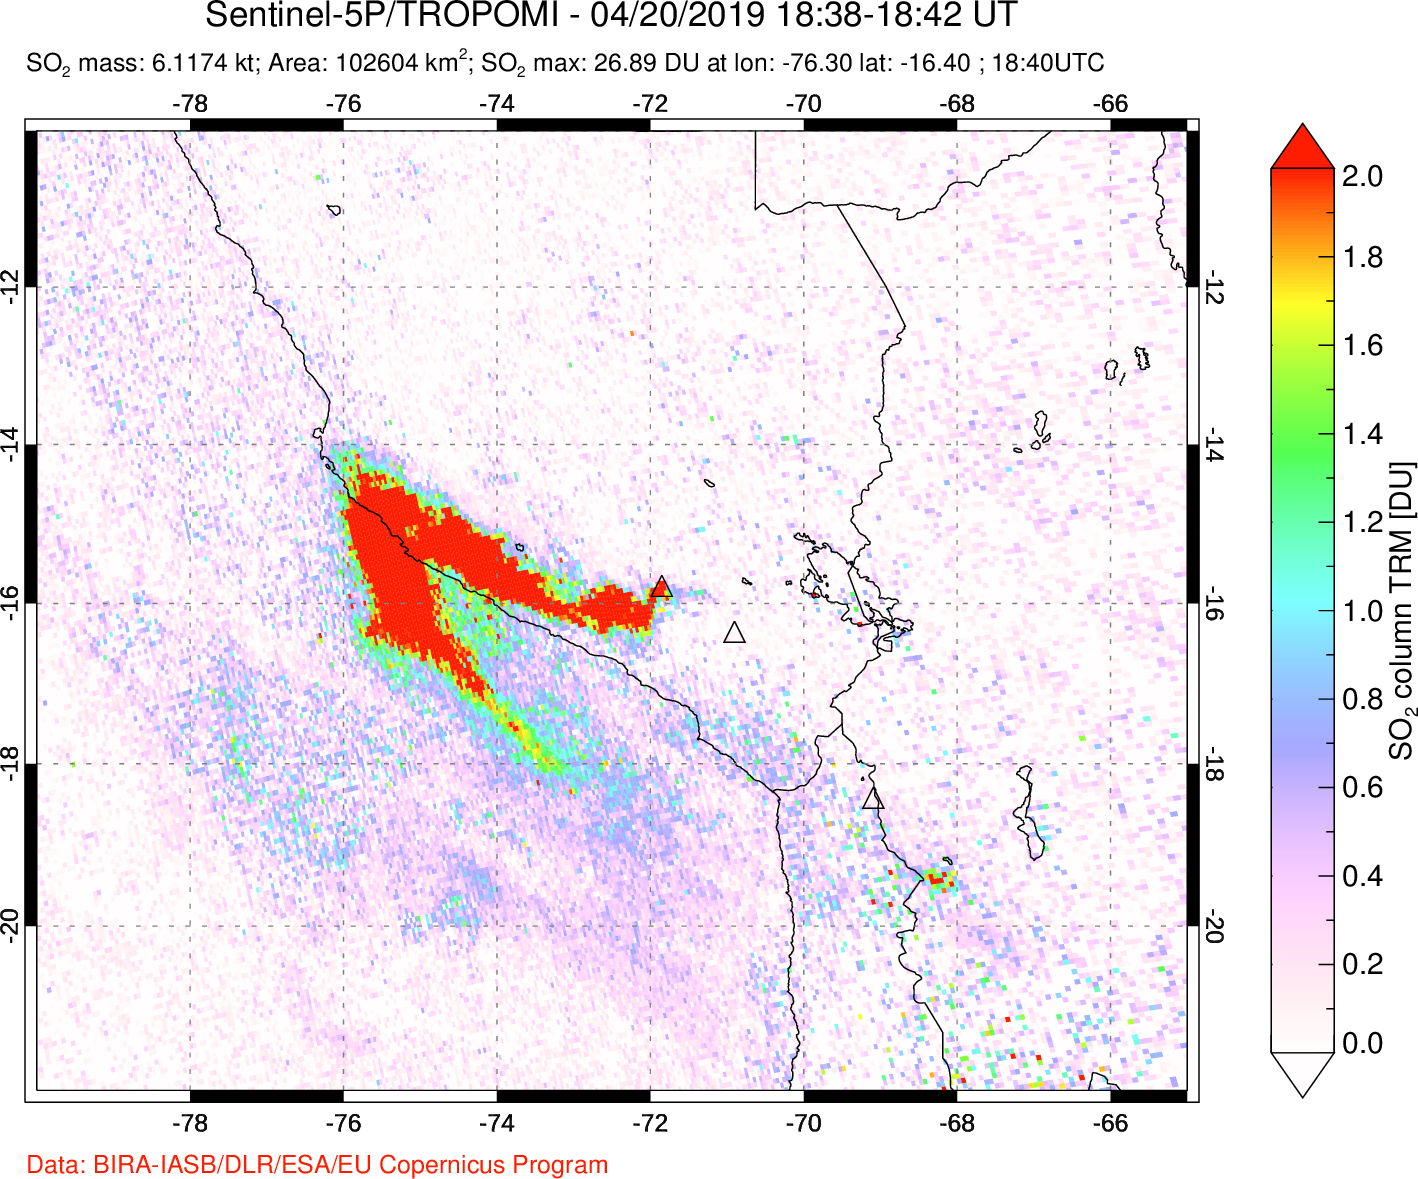 A sulfur dioxide image over Peru on Apr 20, 2019.